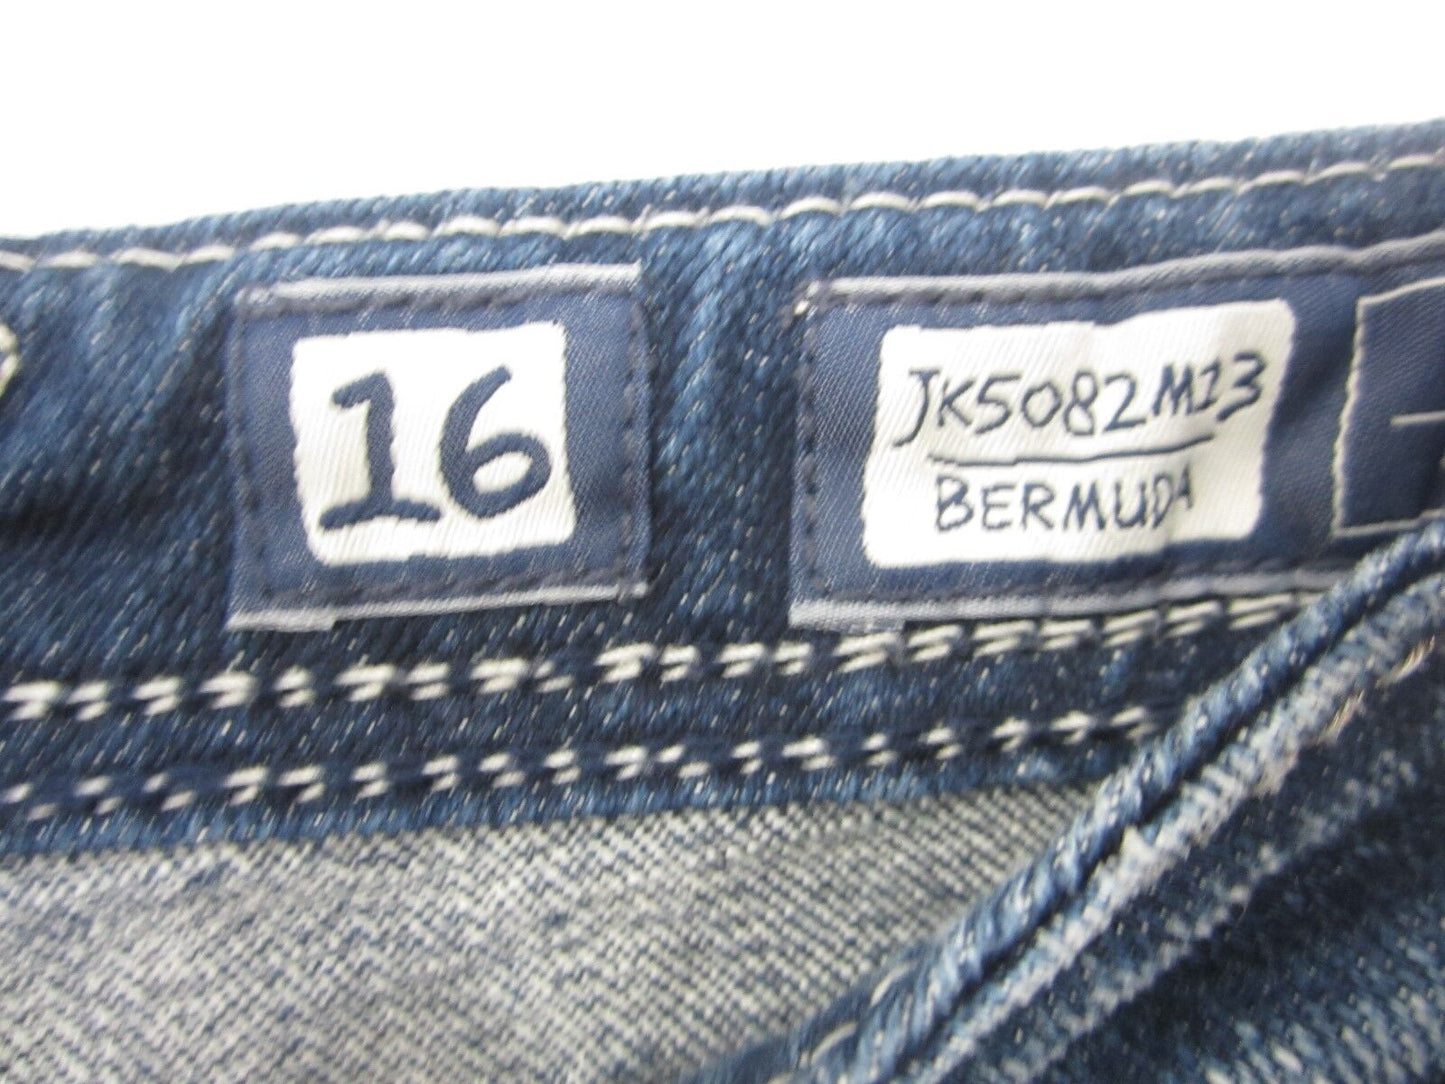 NWOT Miss Me Girls JK5082M13 Bermuda Blue Jean Denim Shorts size 16 Length 12